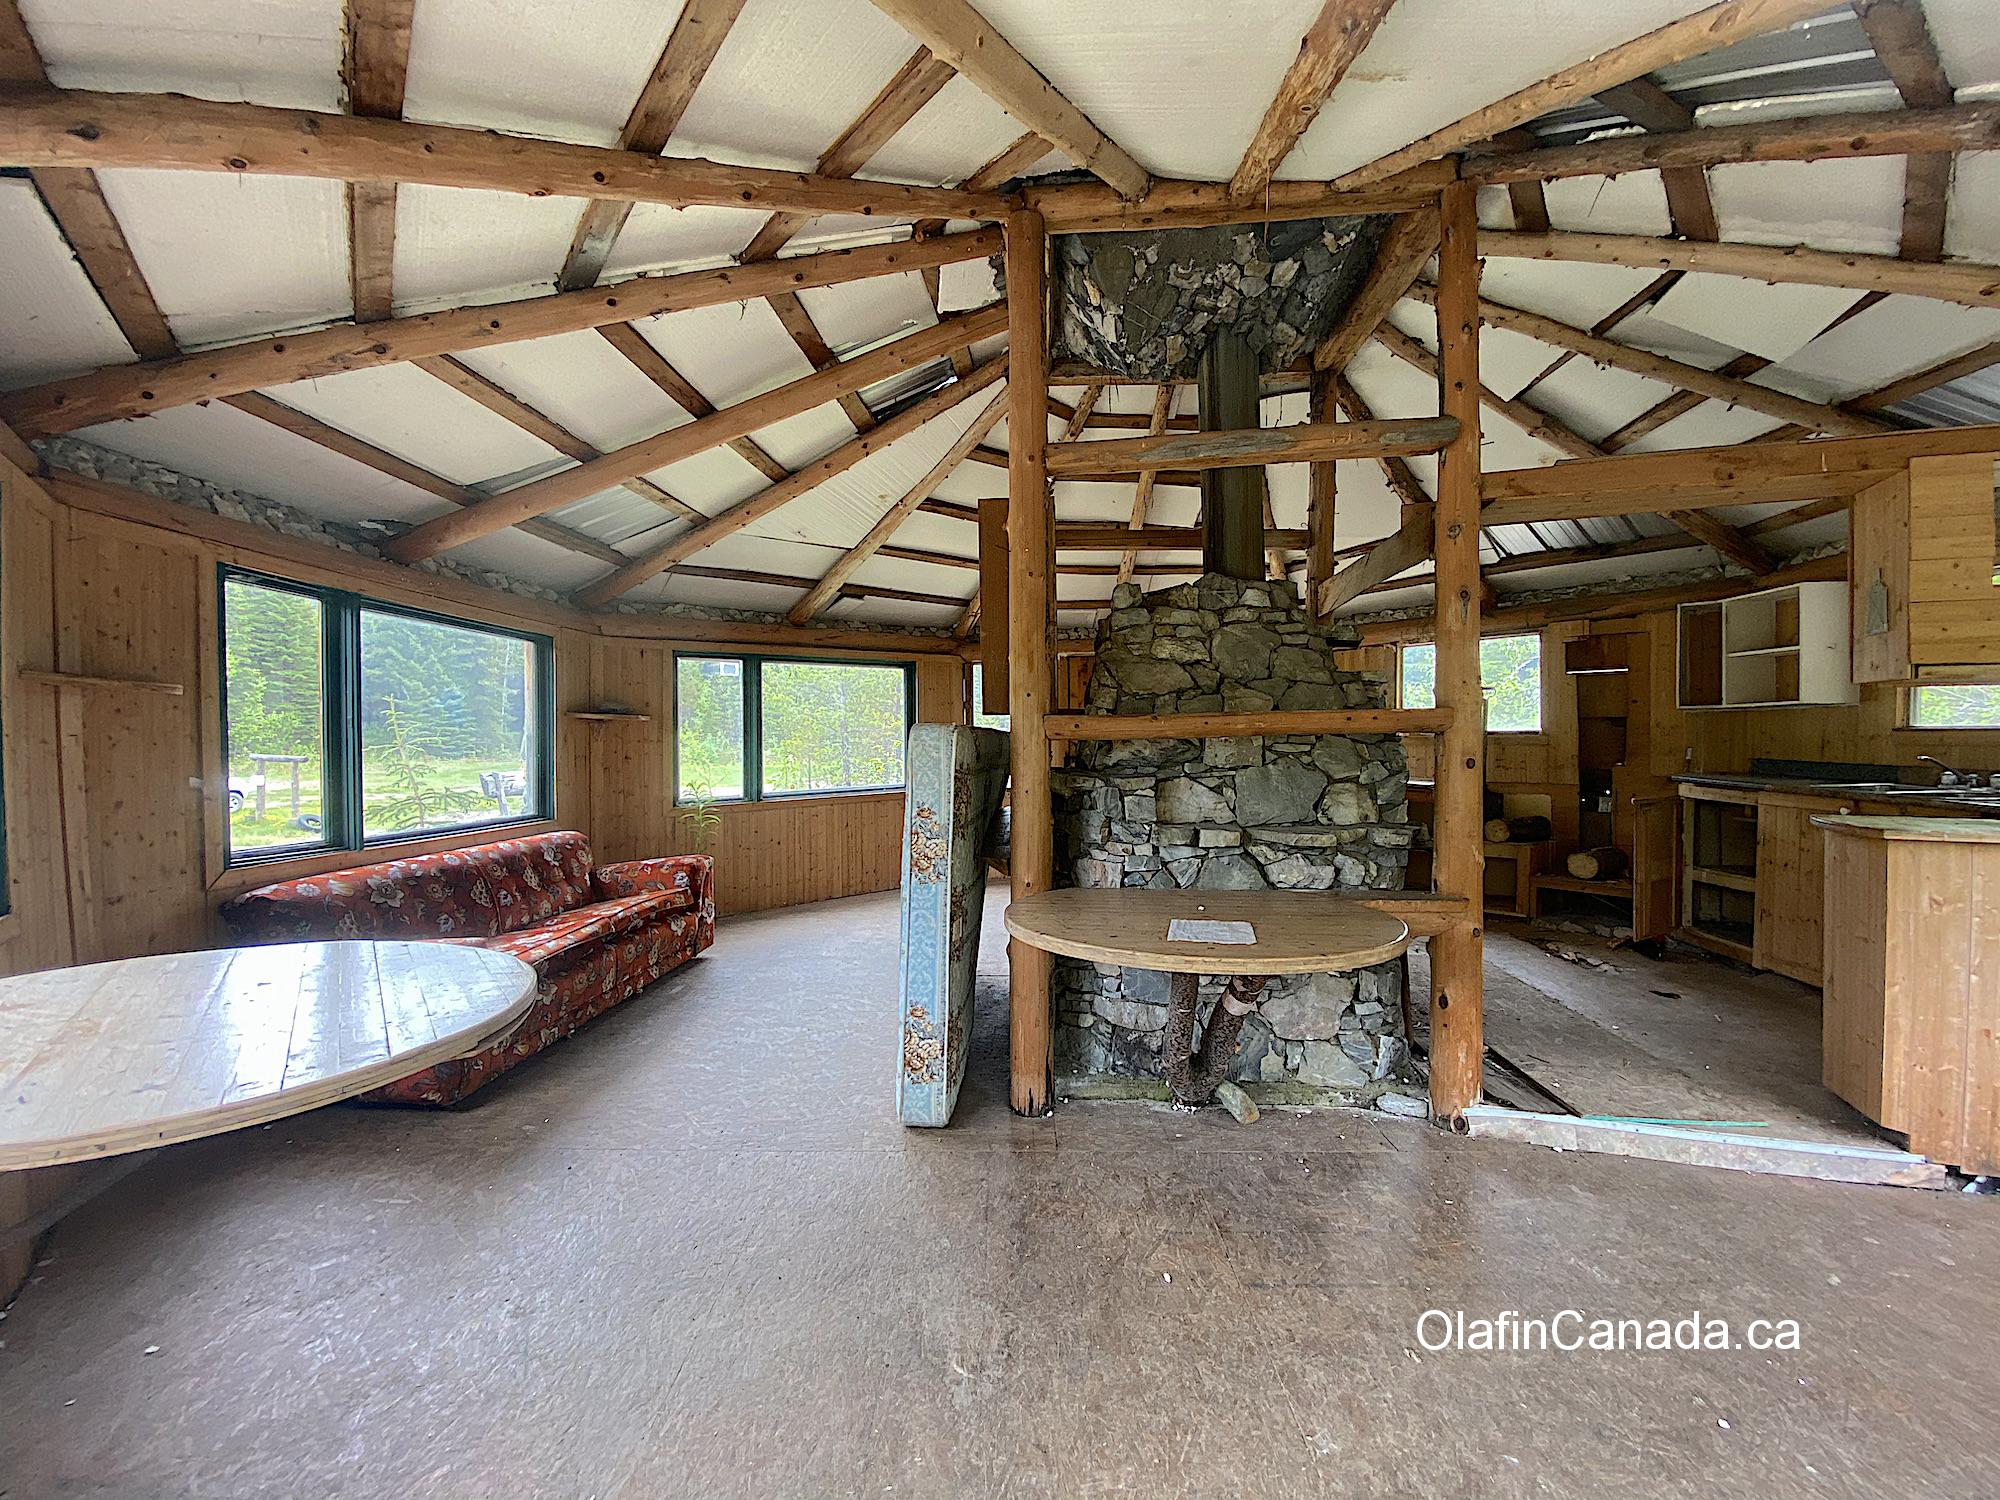 Interior of cabin at Comet Creek Resort in the Cariboo between Likely and Barkerville #olafincanada #britishcolumbia #discoverbc #abandonedbc #cariboo #cometcreekresort